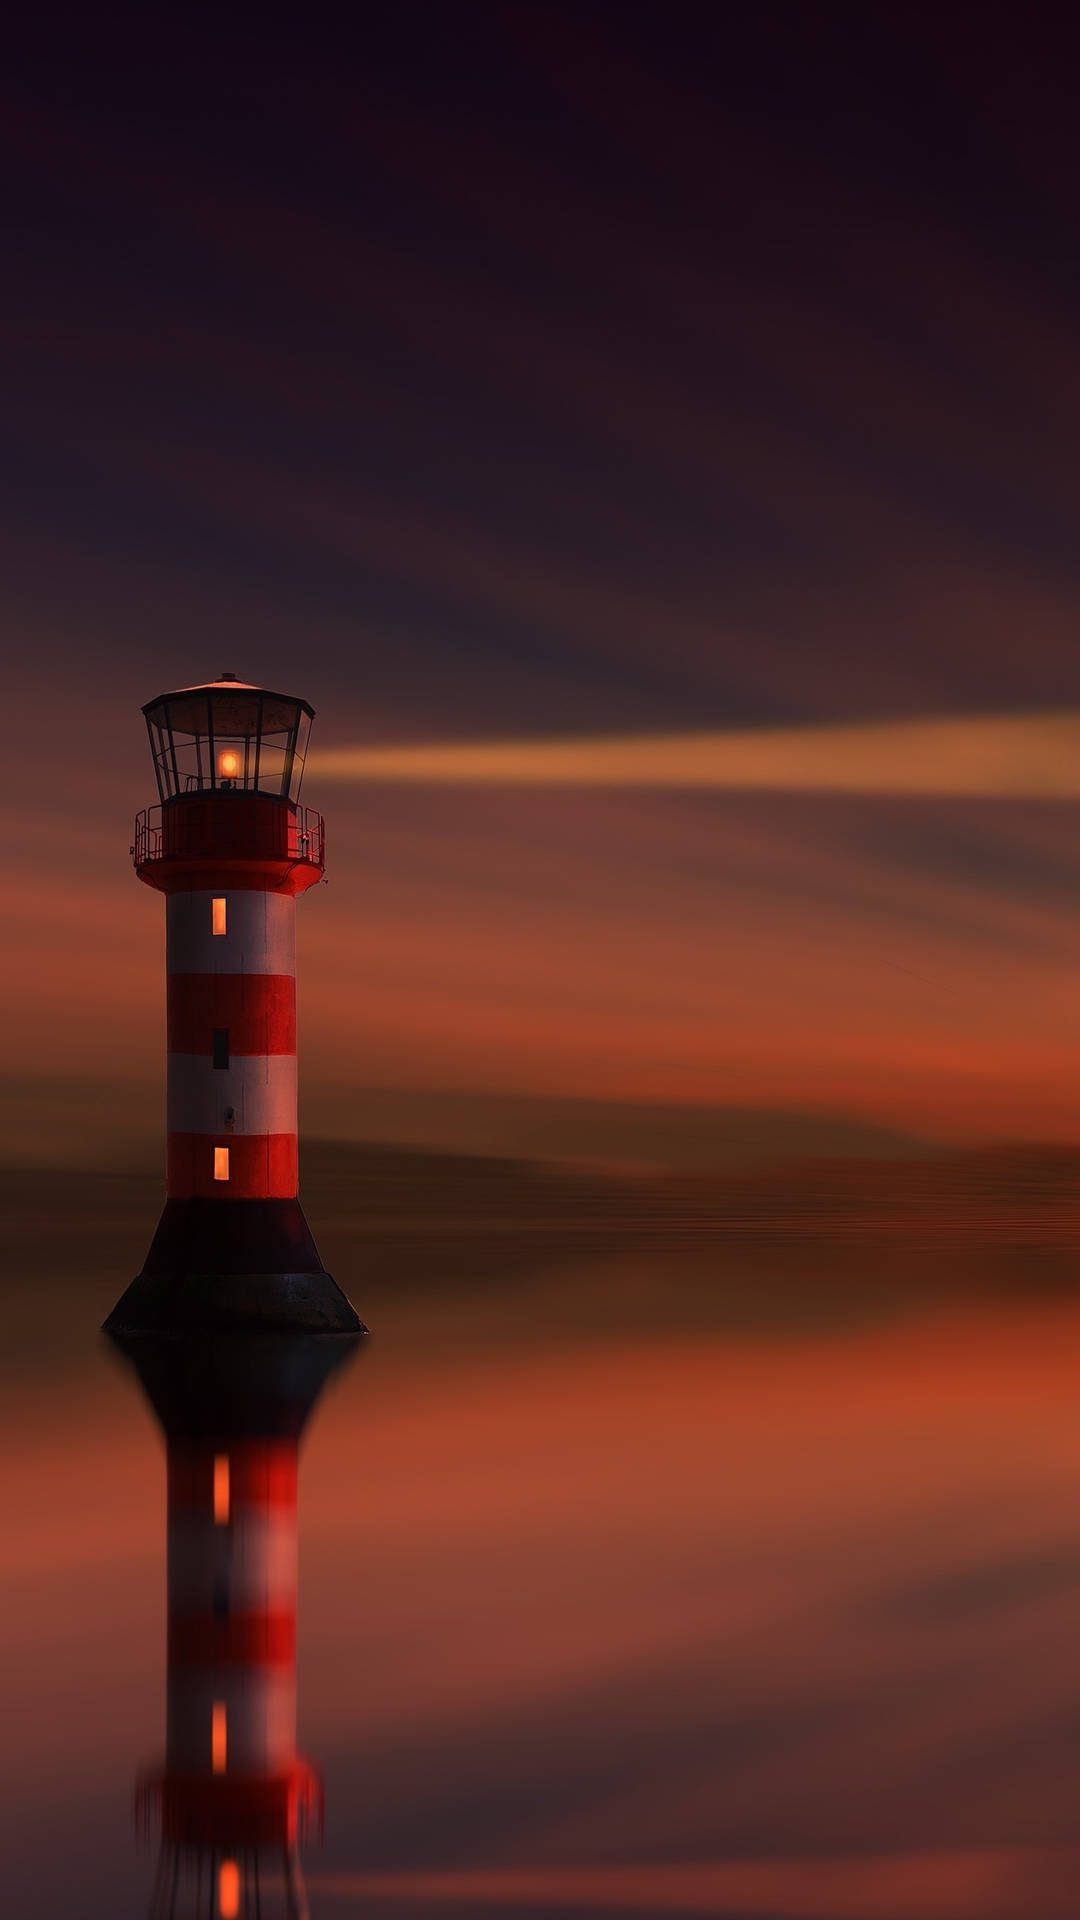 Htc Lighthouse On Sunset